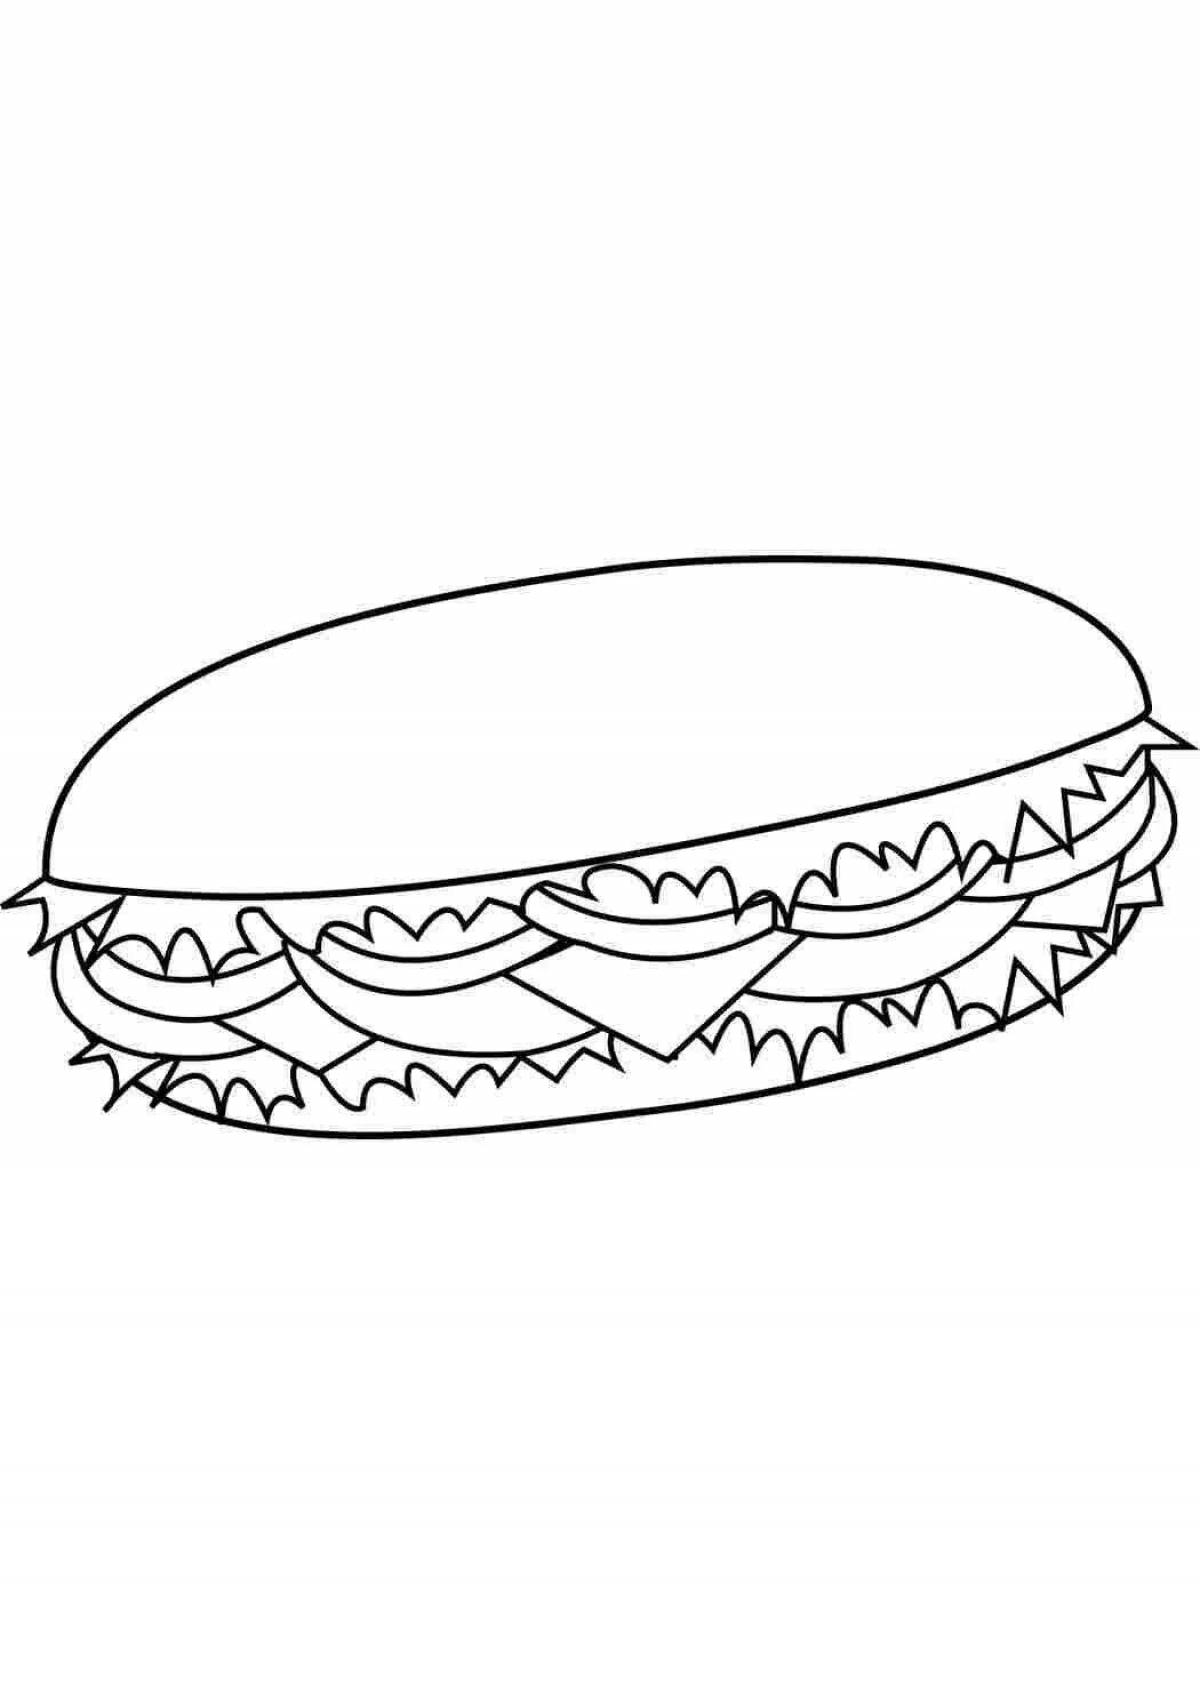 Sandwich fun coloring book for kids